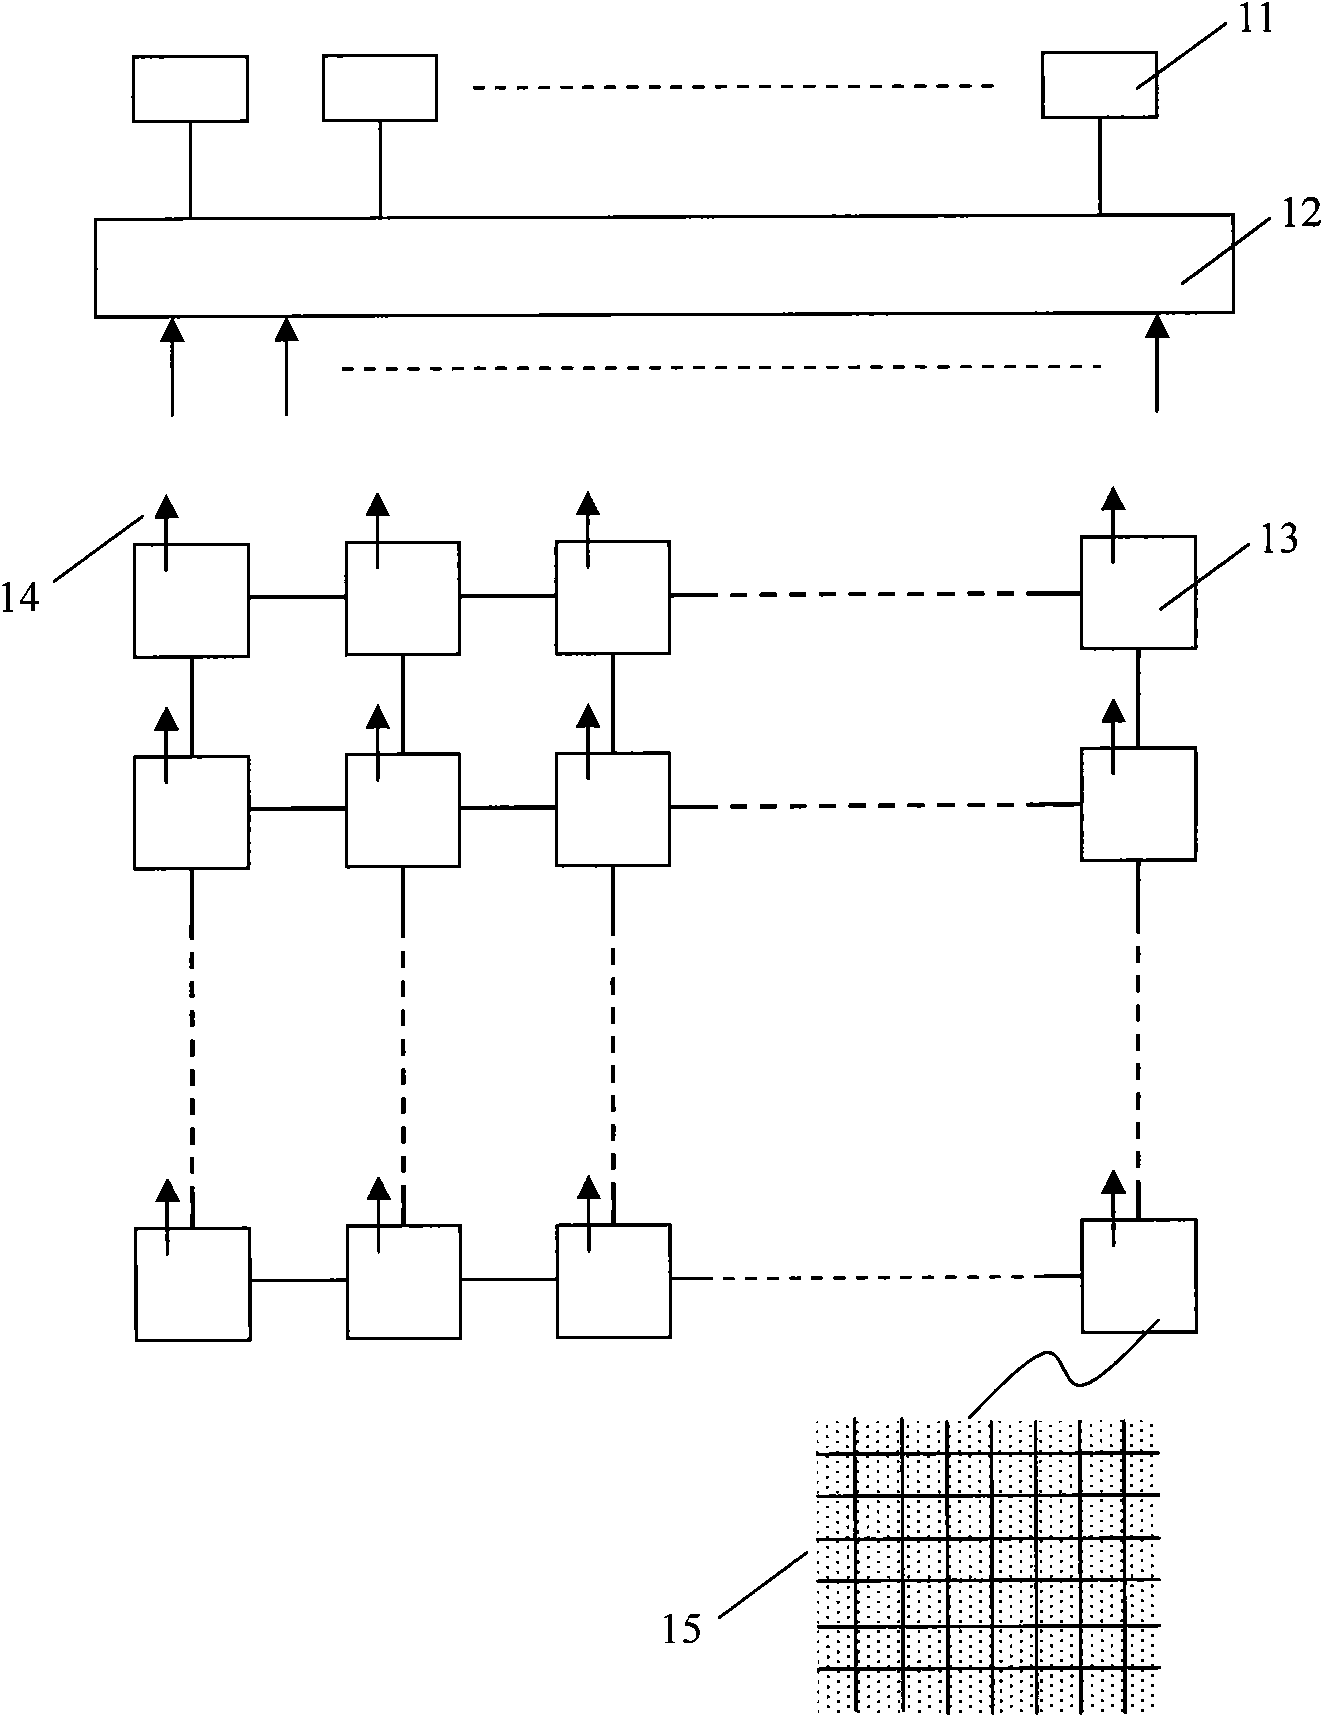 Concurrent computational system for multi-scale discrete simulation